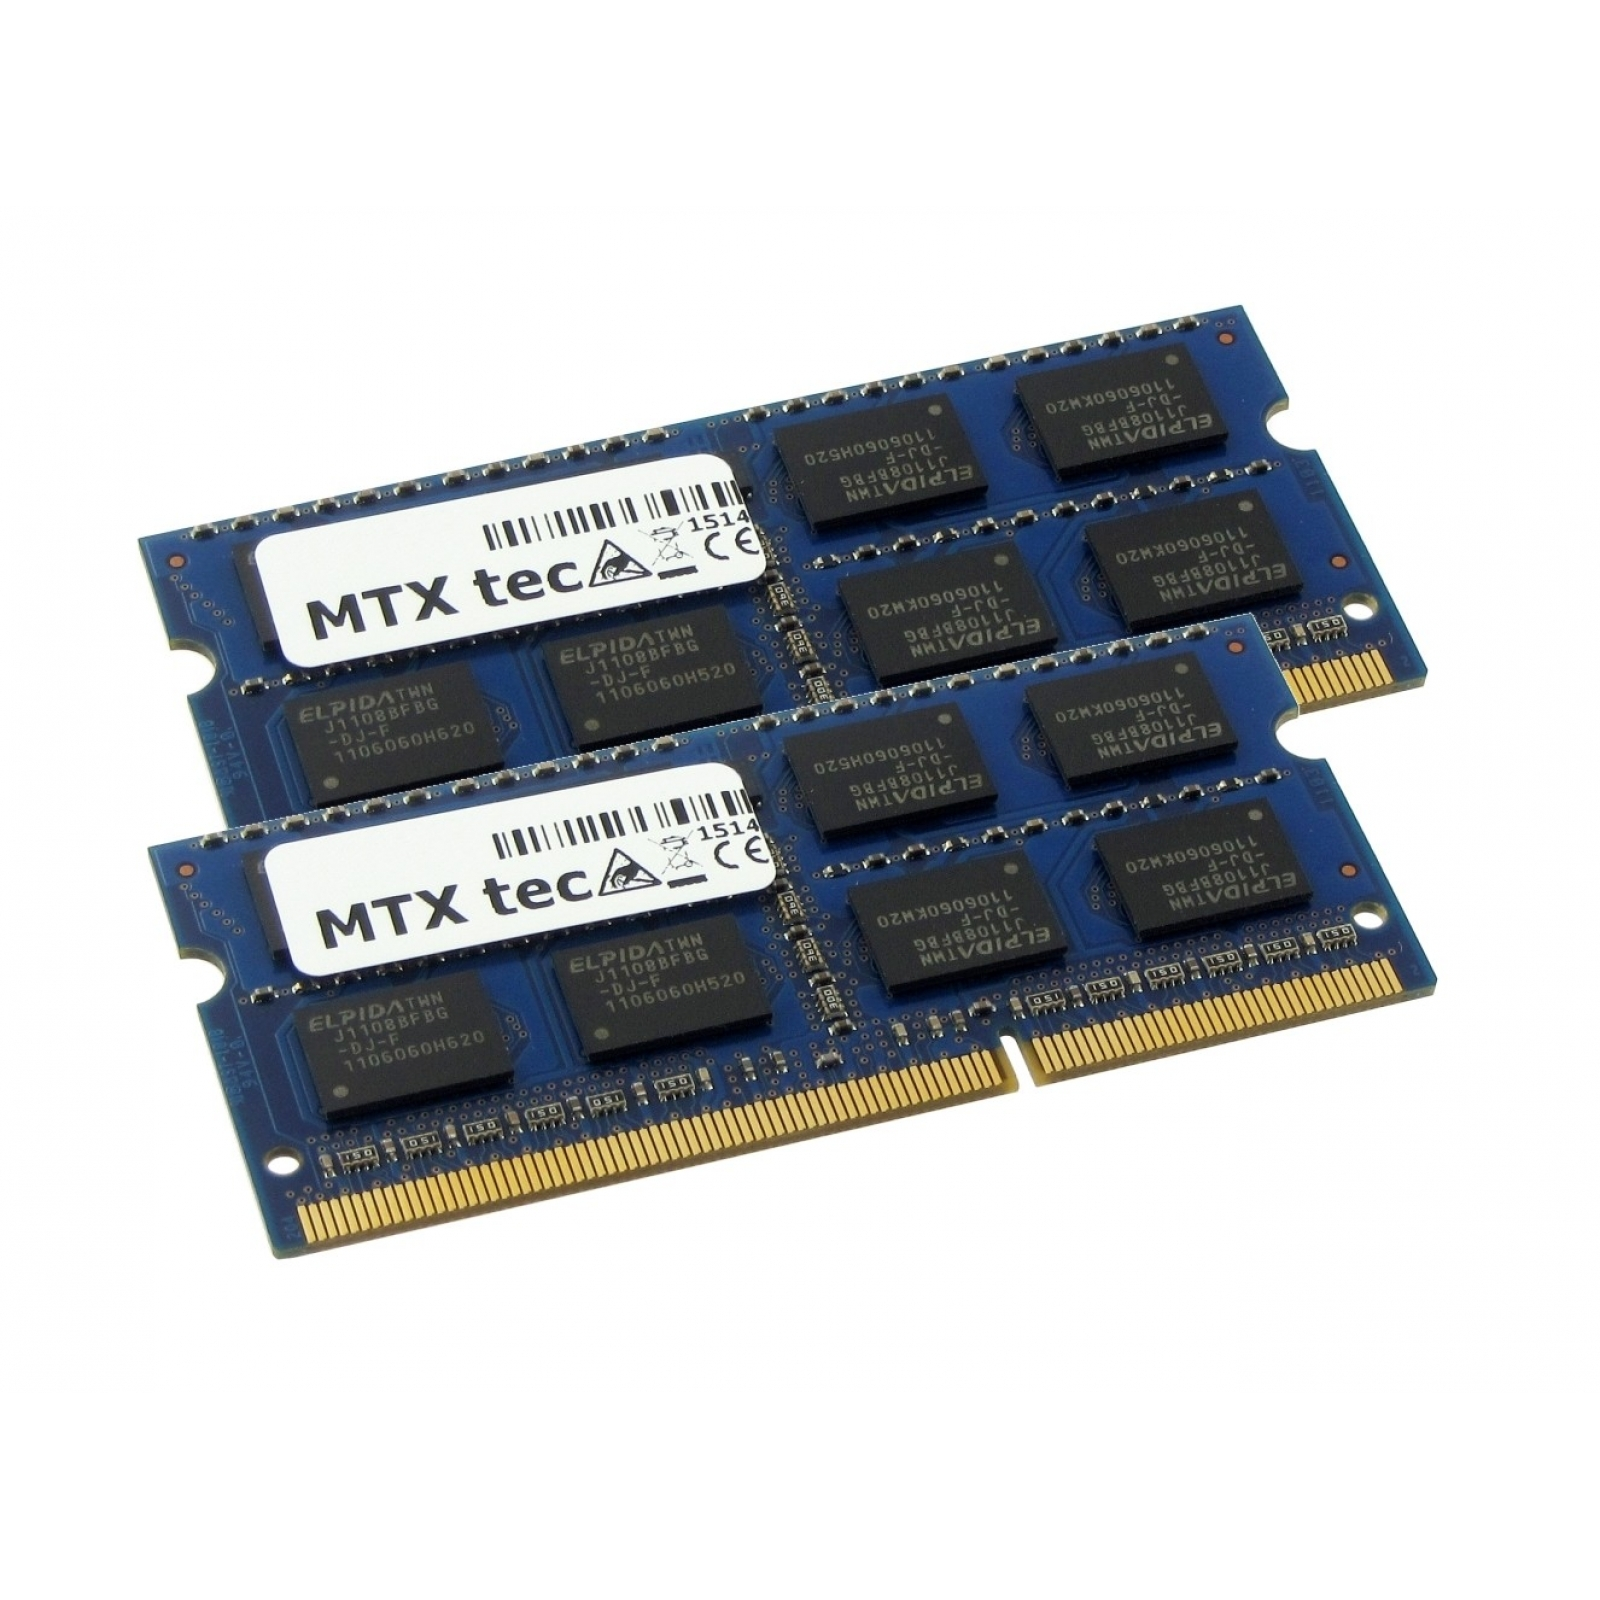 Pin DDR3 1333MHz PC3-10600, Notebook-Speicher Kit 2GB 4GB RAM DDR3 2x 204 2 SODIMM Laptop-Speicher MTXTEC DDR3 GB